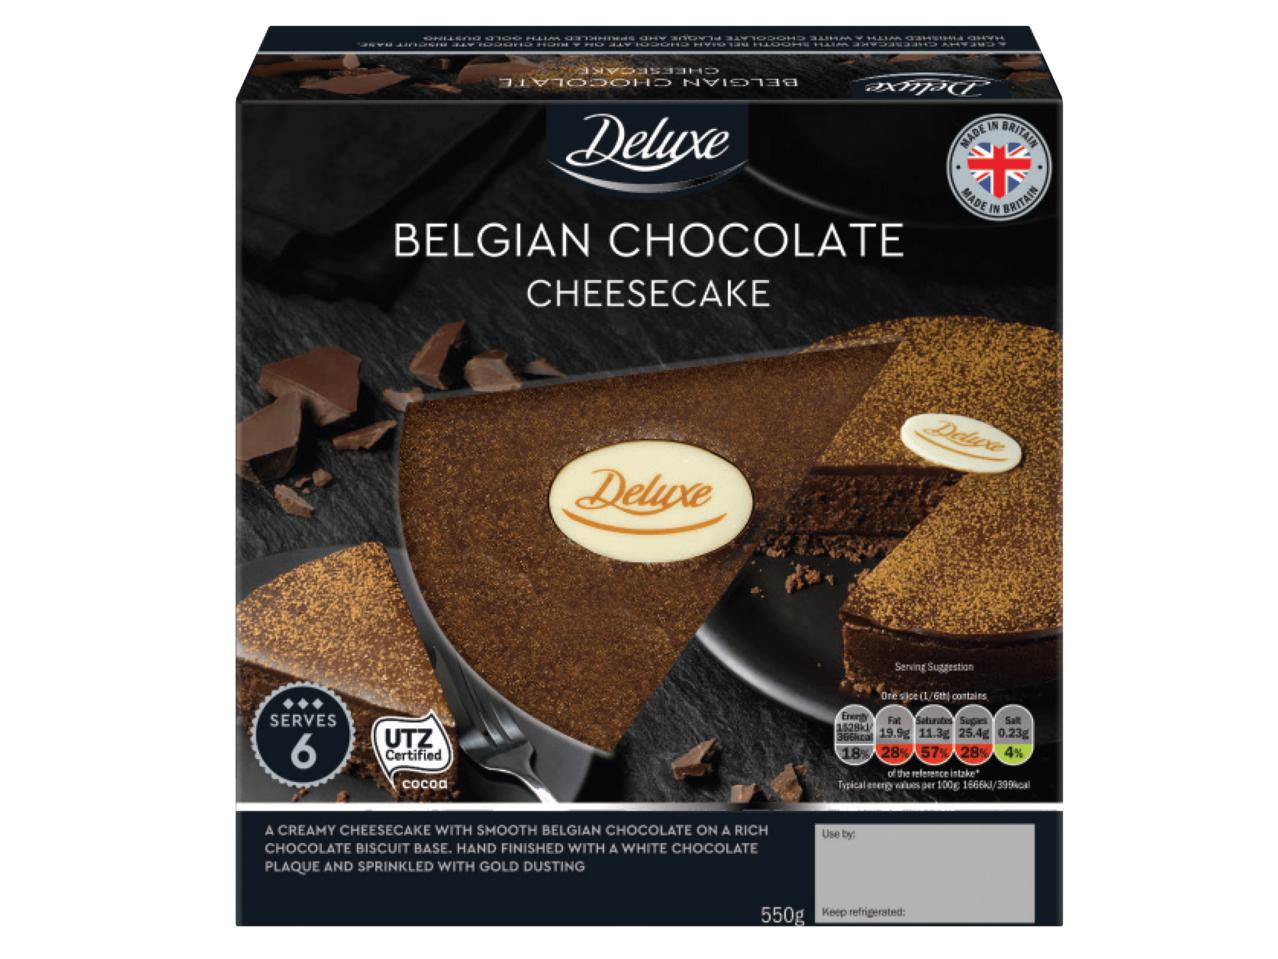 DELUXE Belgian Chocolate Cheesecake